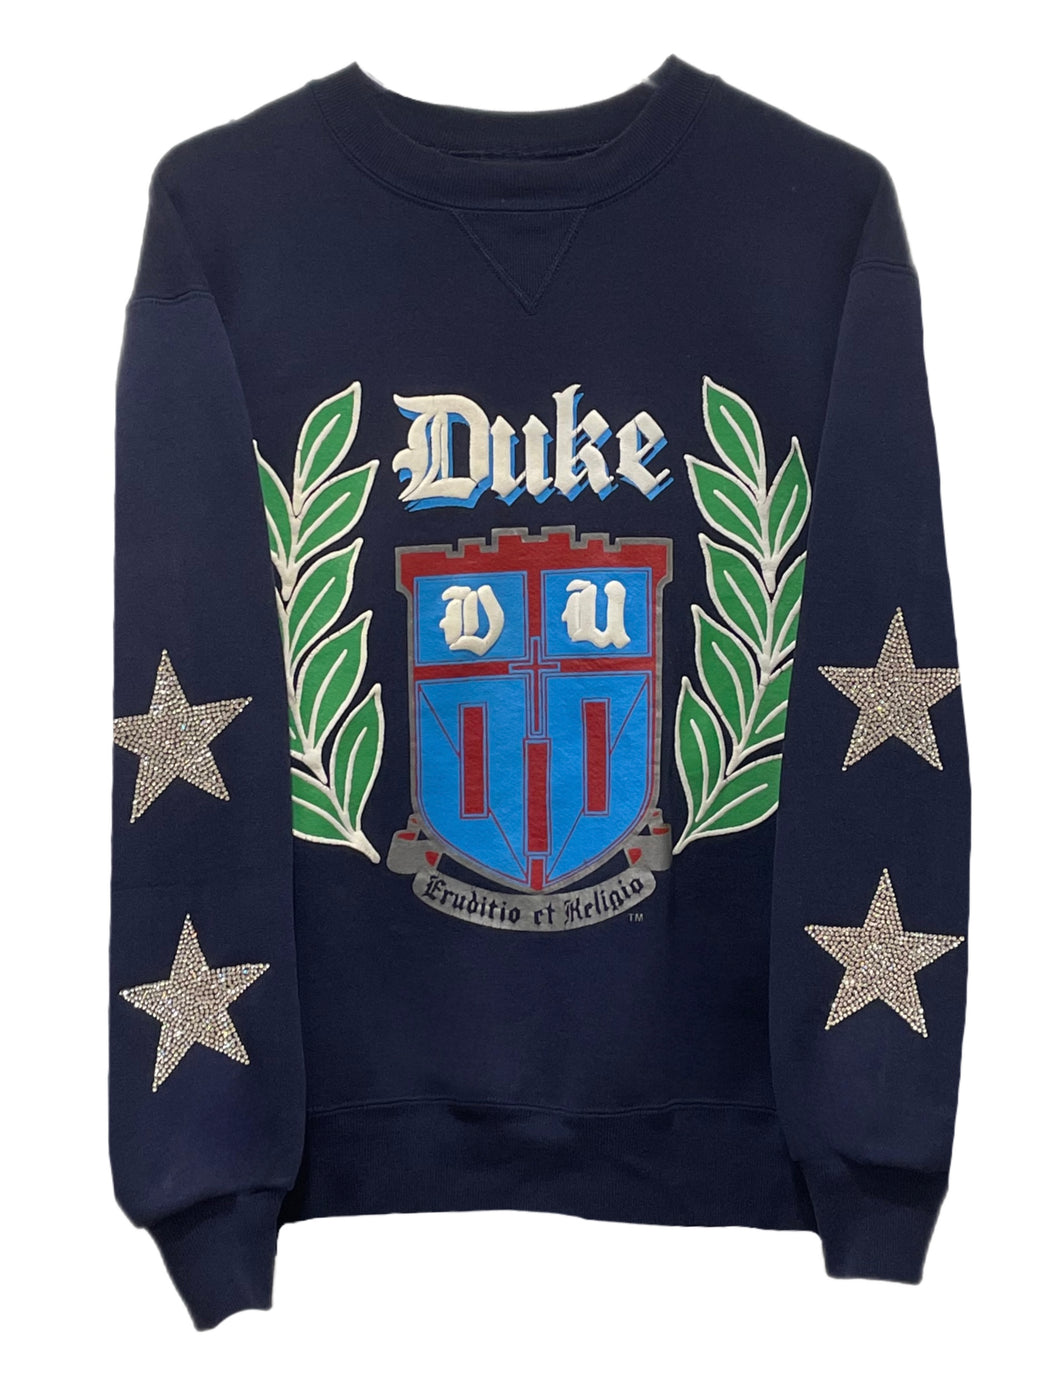 Duke Univeristy, One of a KIND “Rare Find” Vintage Sweatshirt with Crystal Star Design.